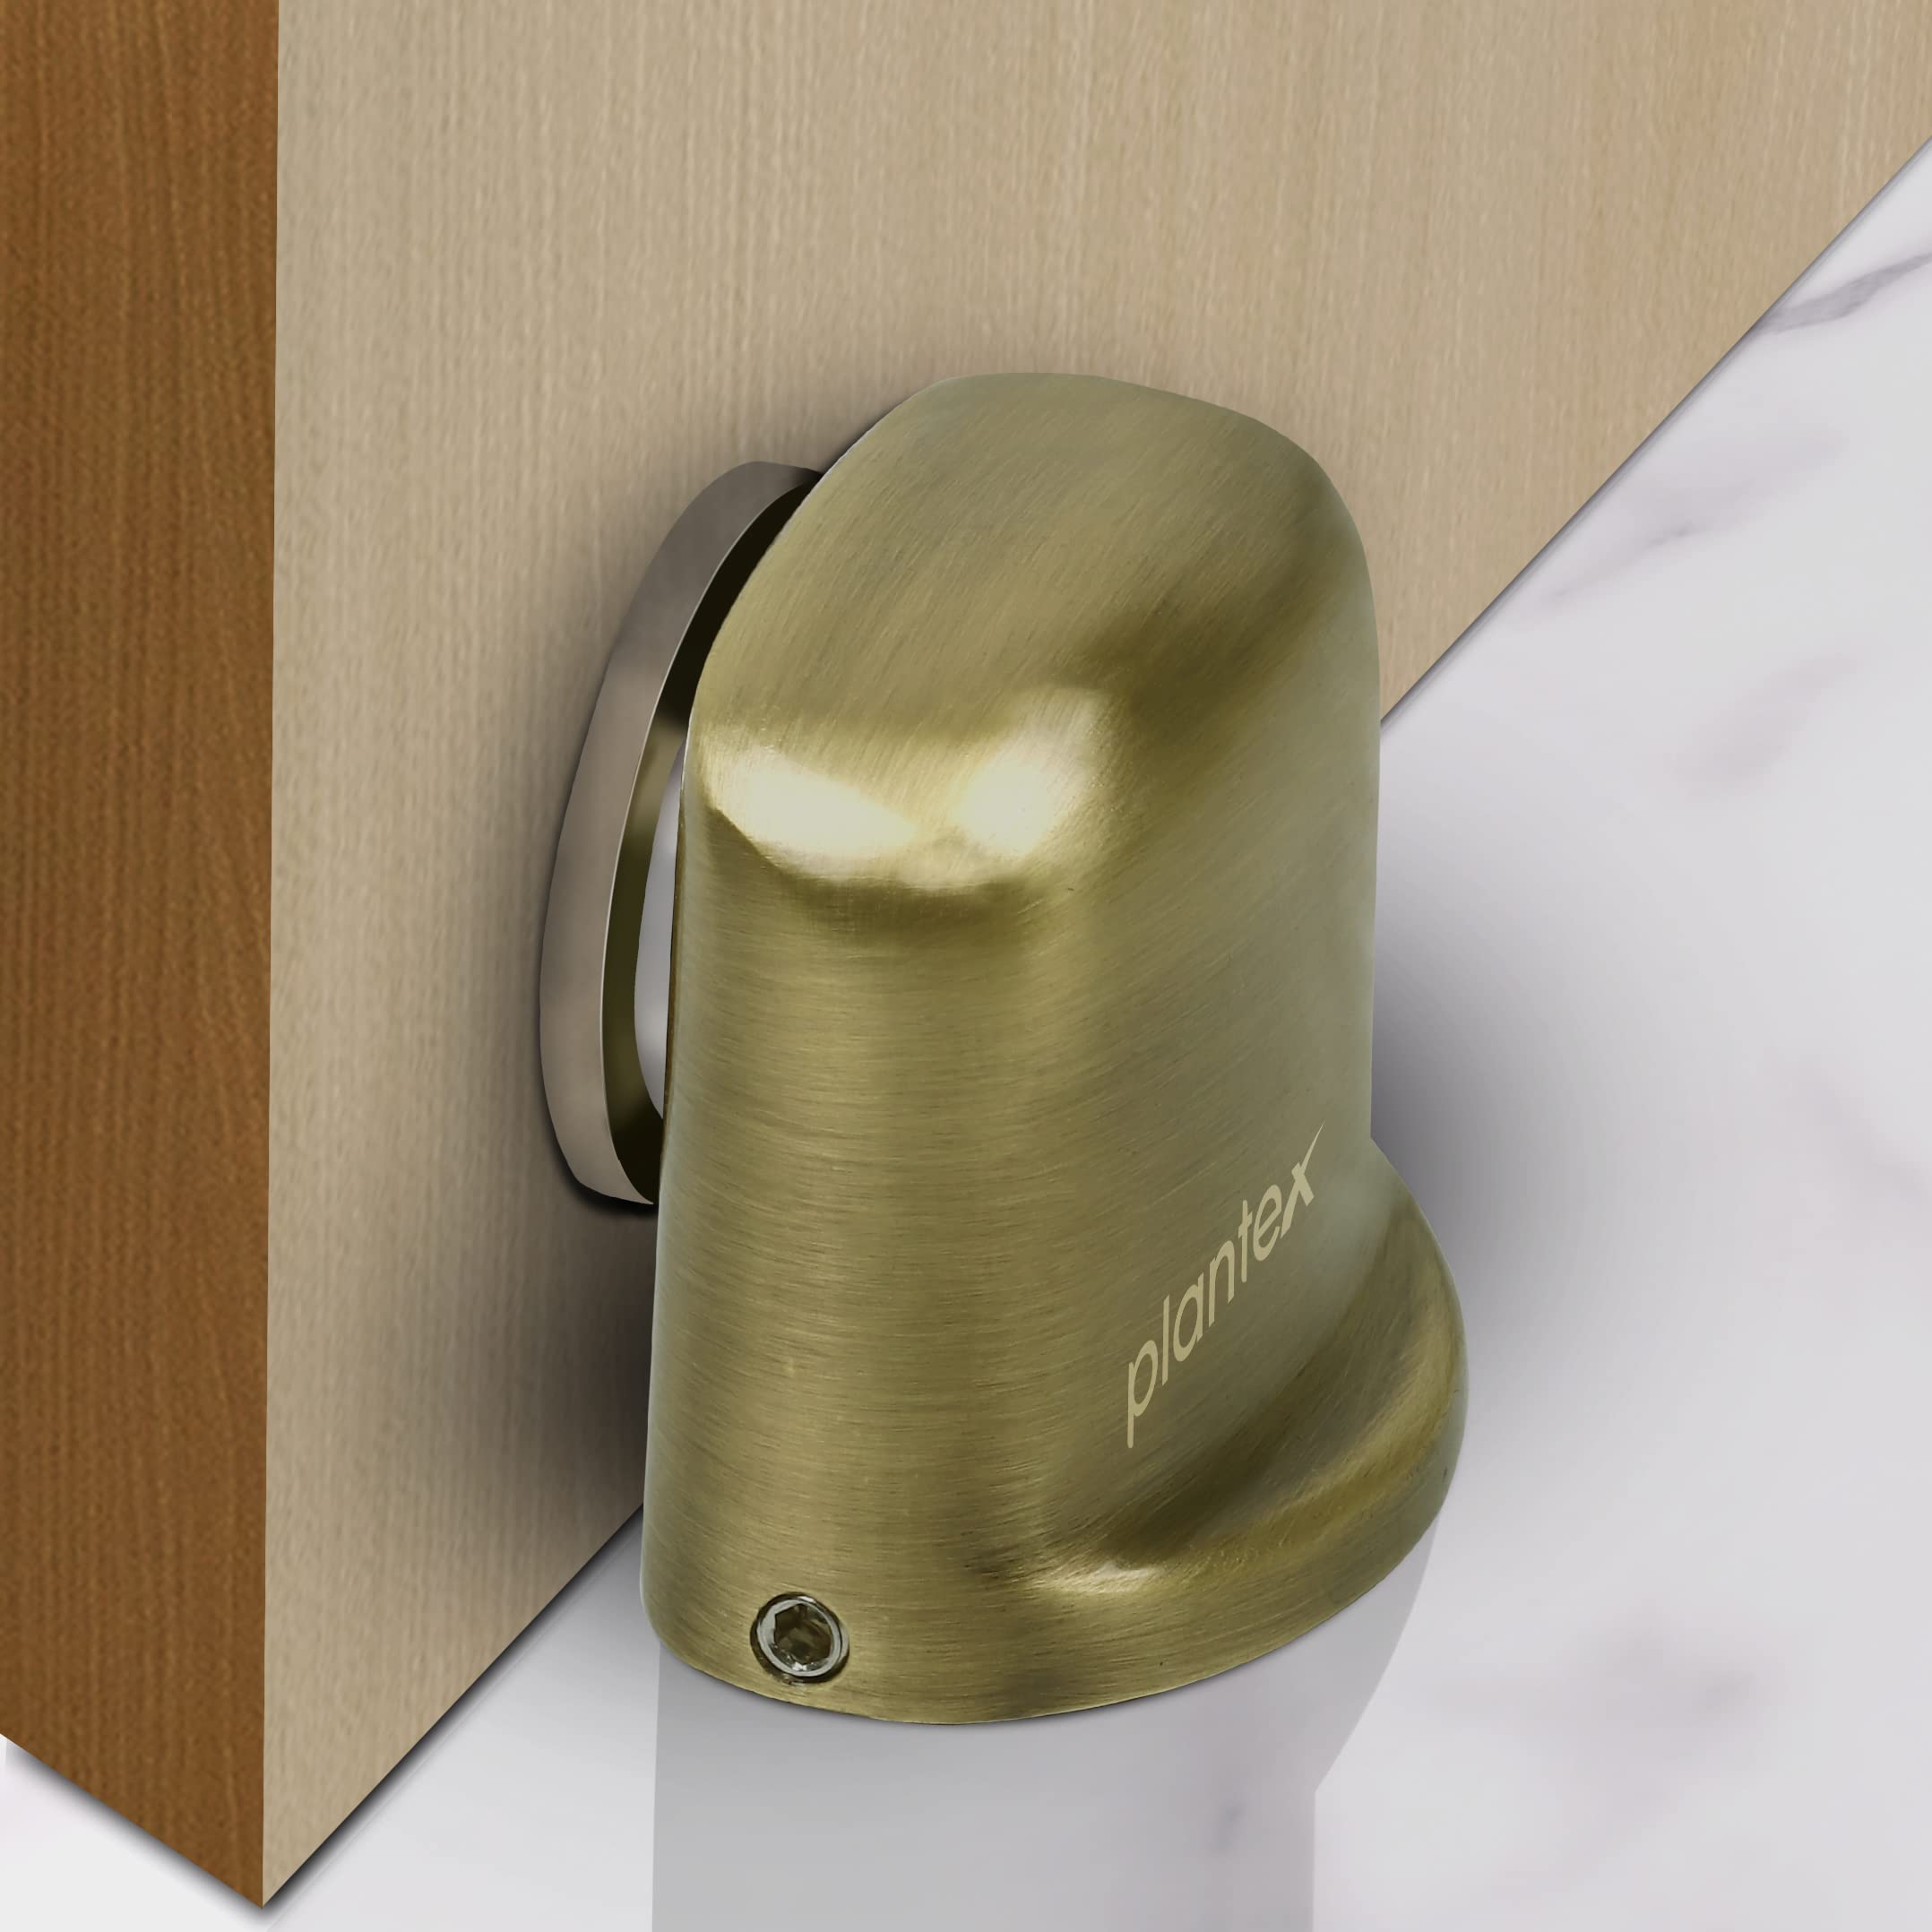 Plantex Heavy Duty Door Magnet Stopper/Door Catch Holder for Home/Office/Hotel, Floor Mounted Soft-Catcher to Hold Wooden/Glass/PVC Door - Pack of 8 (193 - Brass Antique)